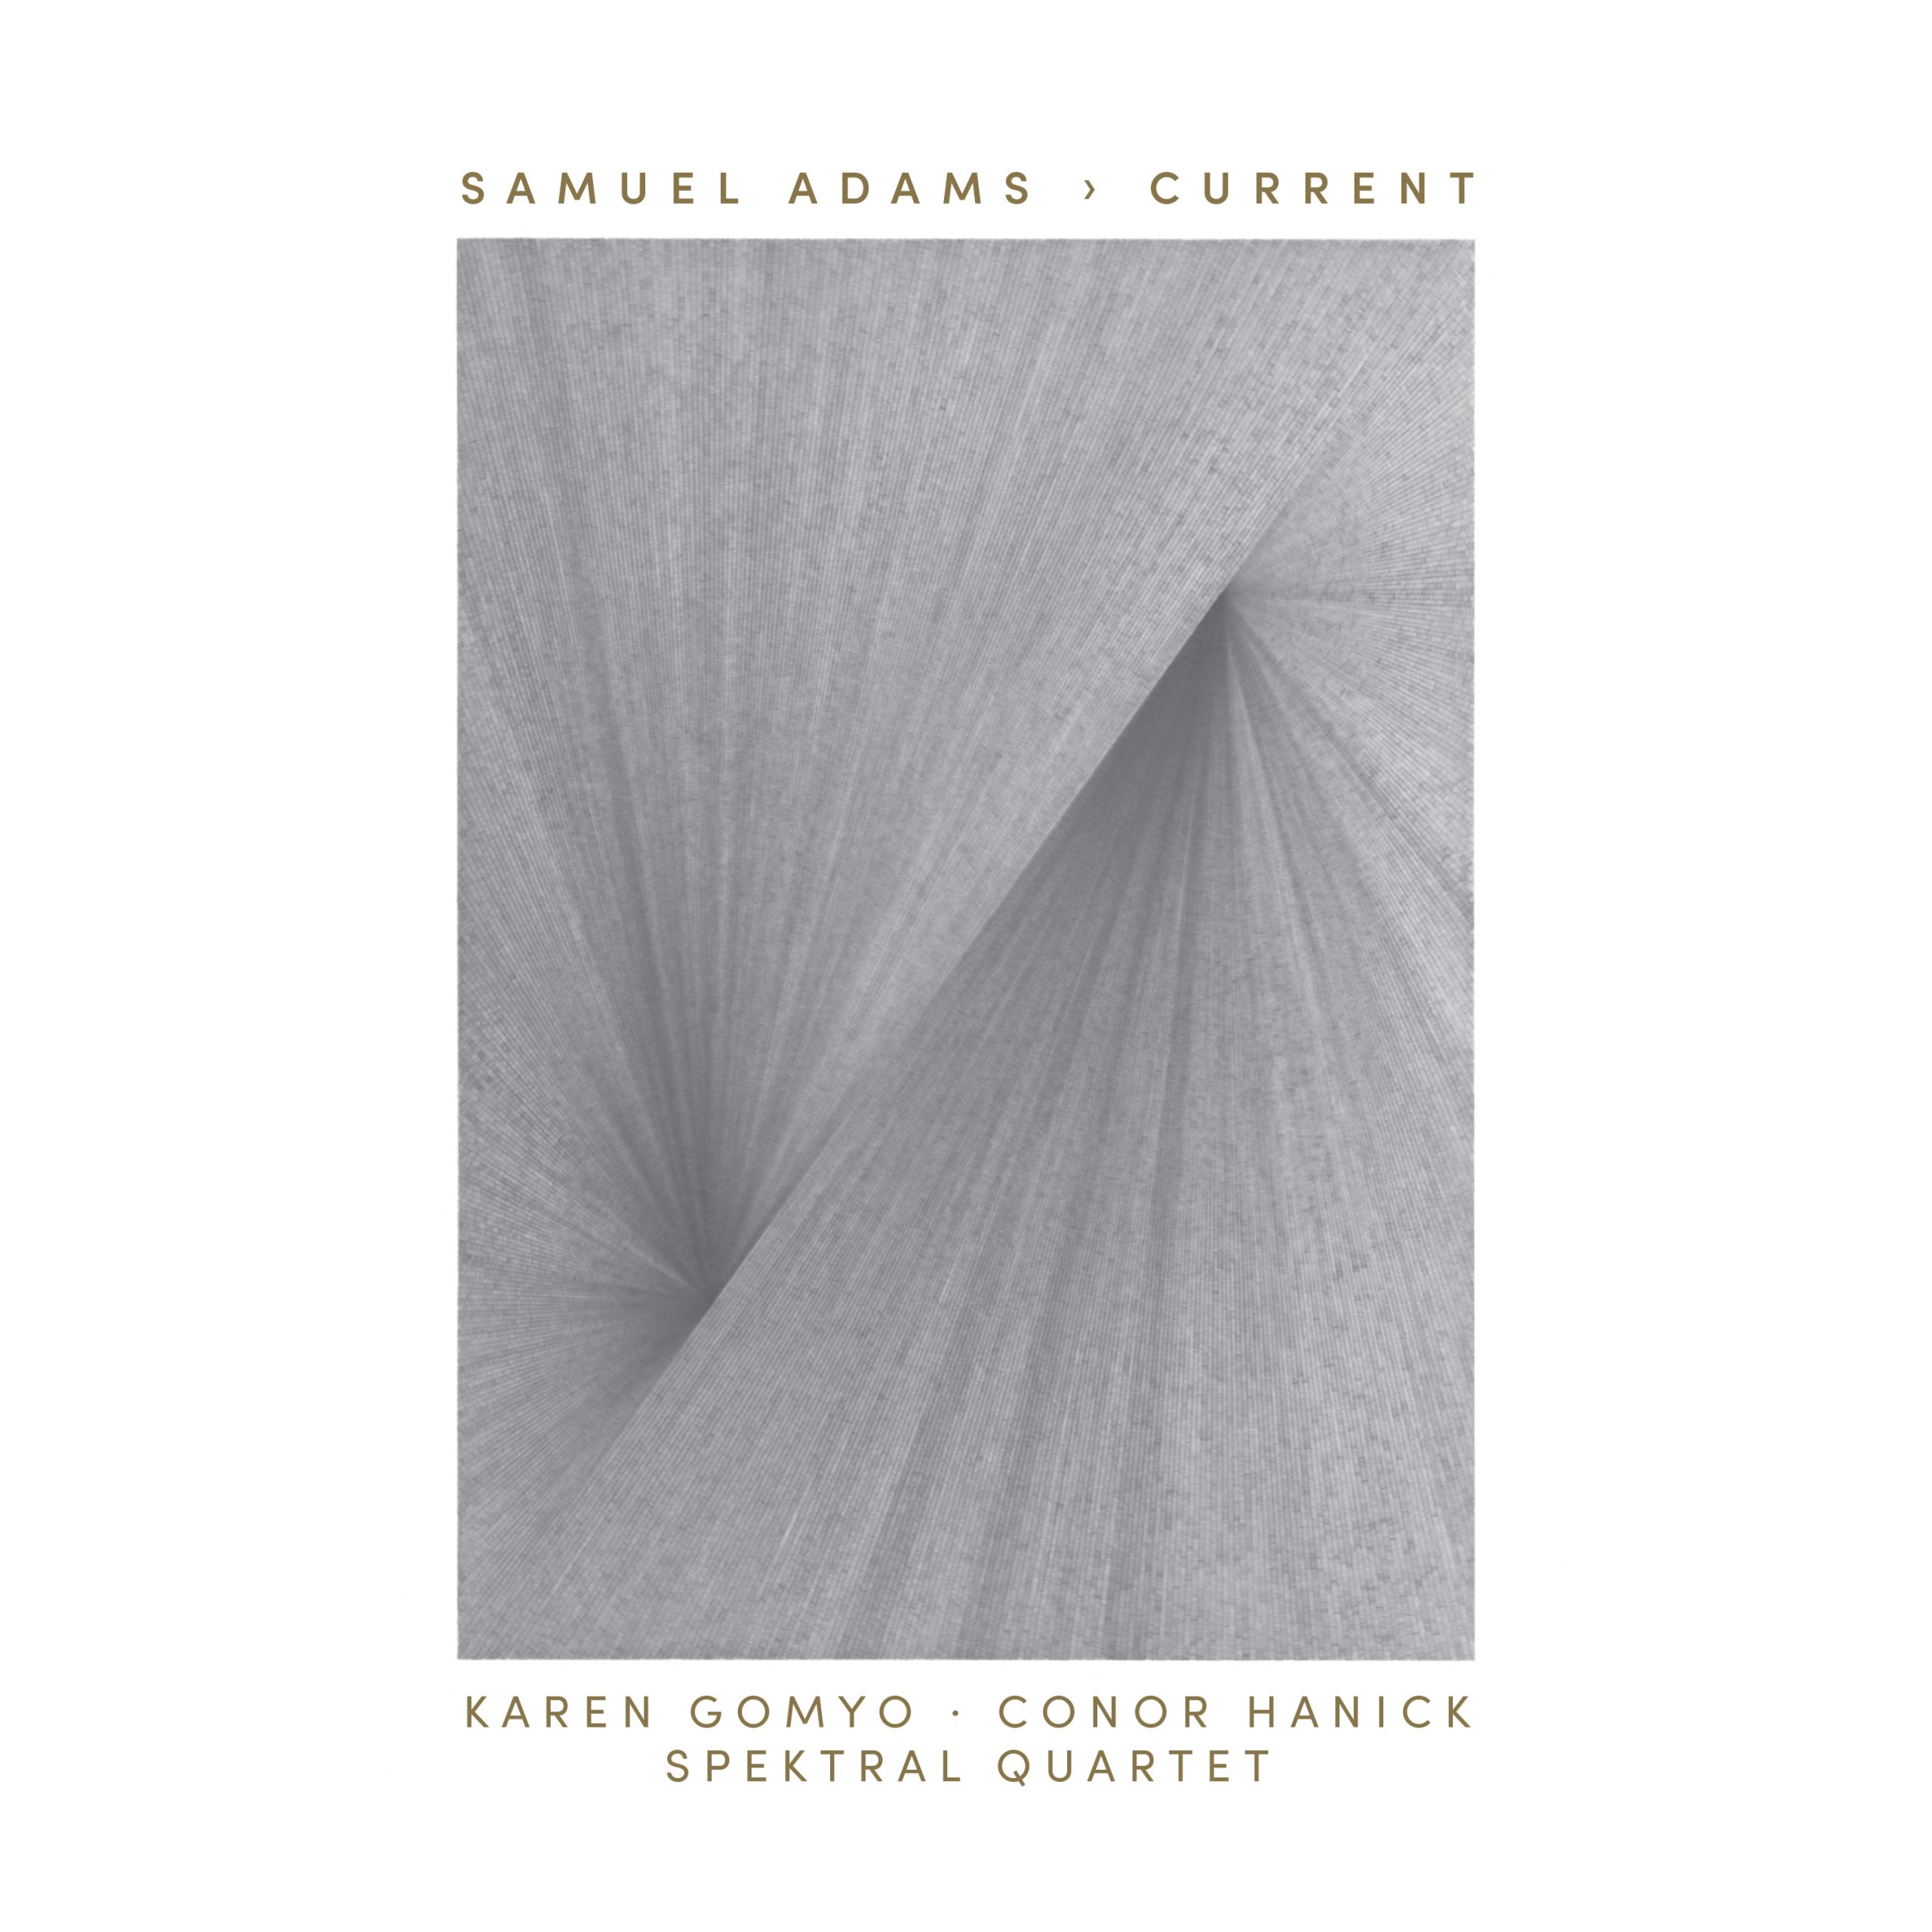 Samuel Adams Current CD cover